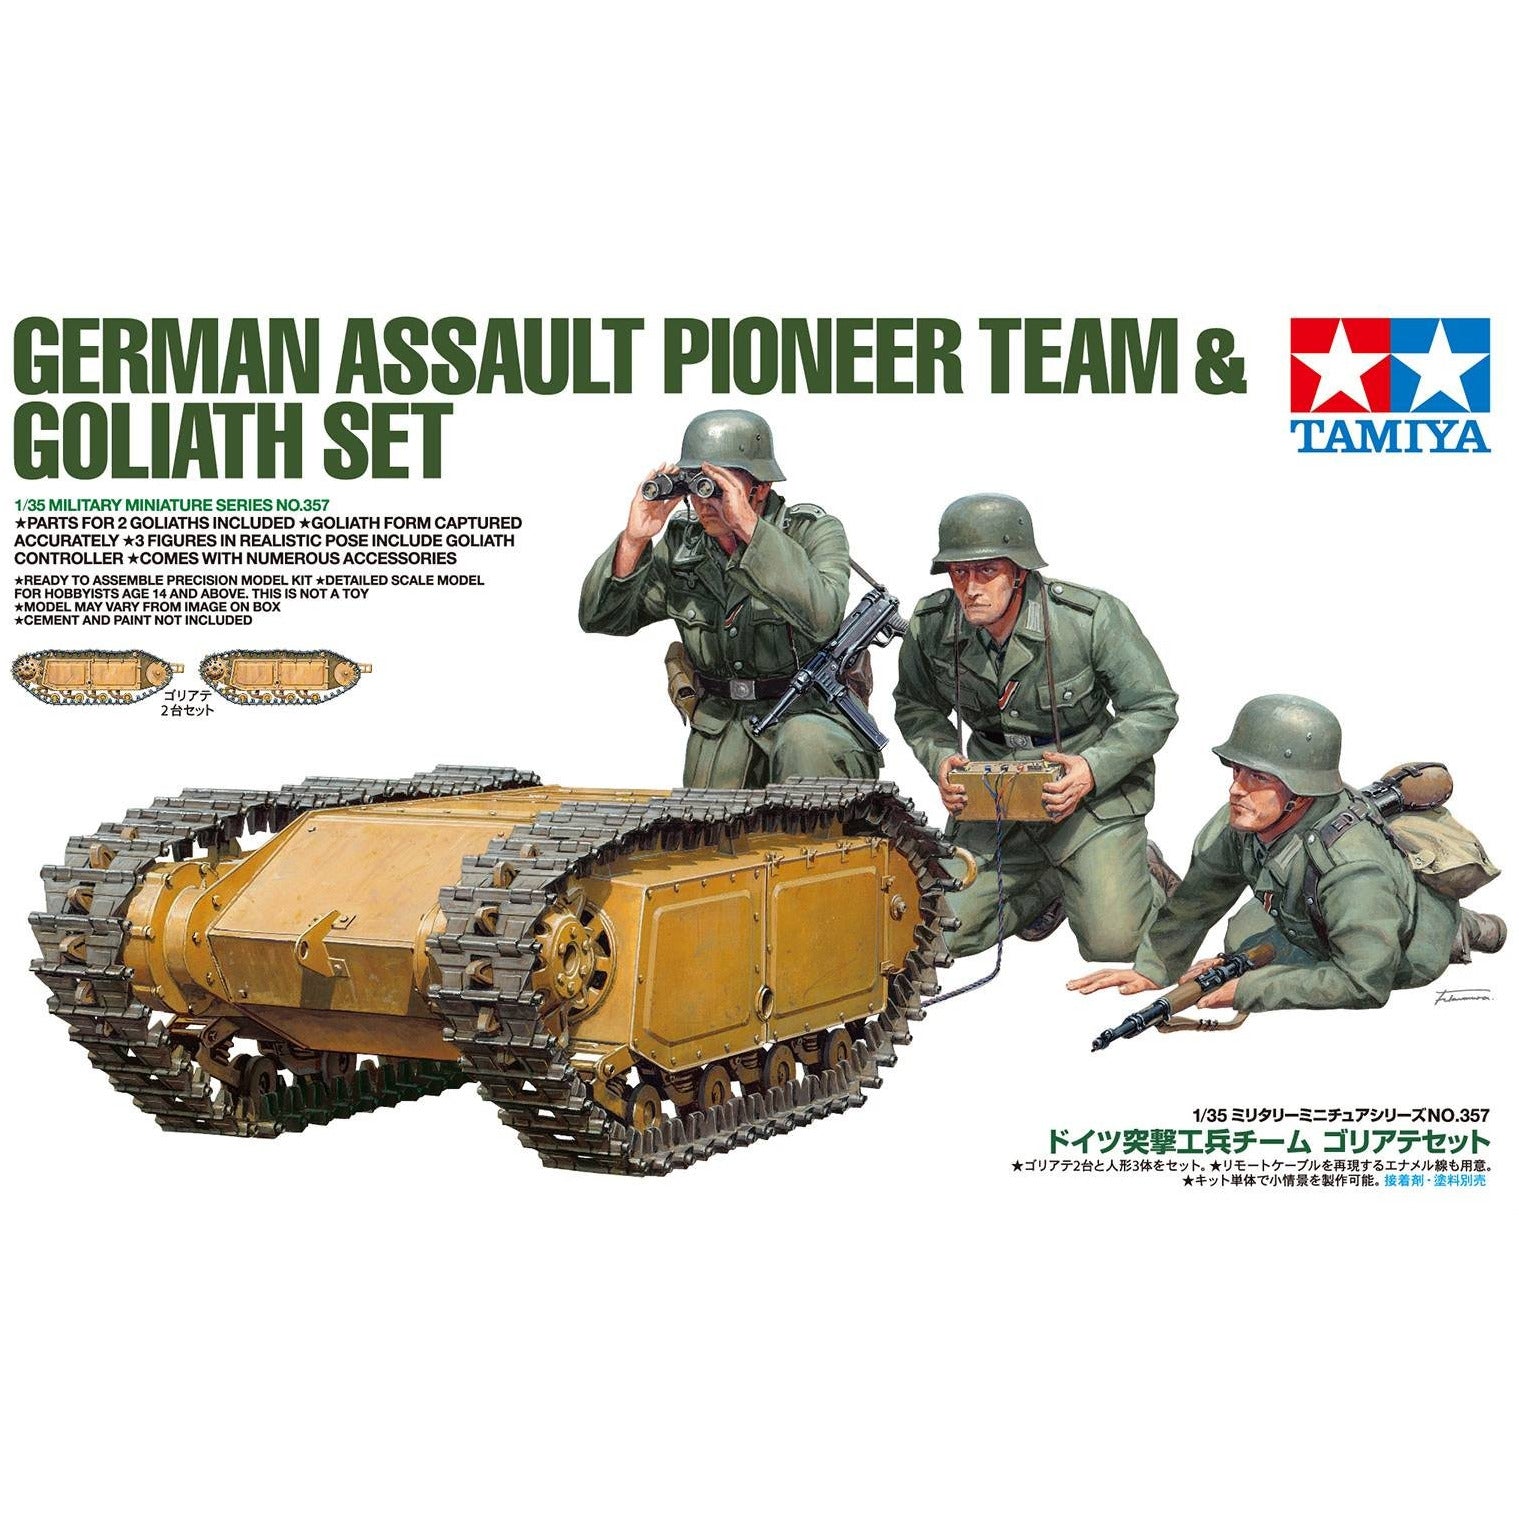 WWII German Assault Pioneer Team & Goliath Set #35357 1/35 Scenery Kit by Tamiya